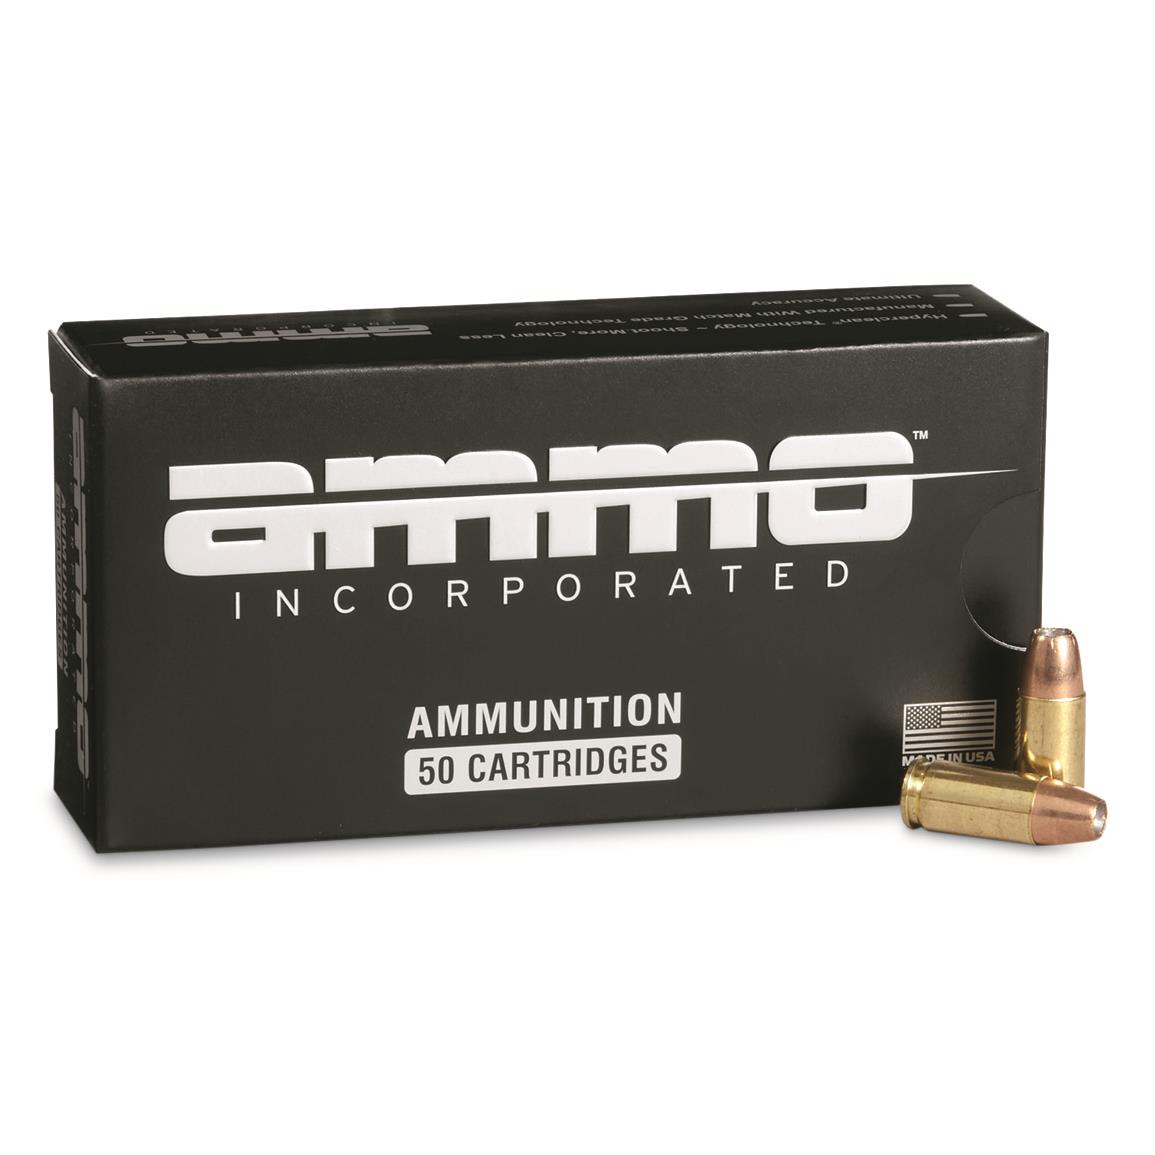 Ammo Inc. Signature, 9mm, Sierra Match JHP, 115 Grain, 50 Rounds